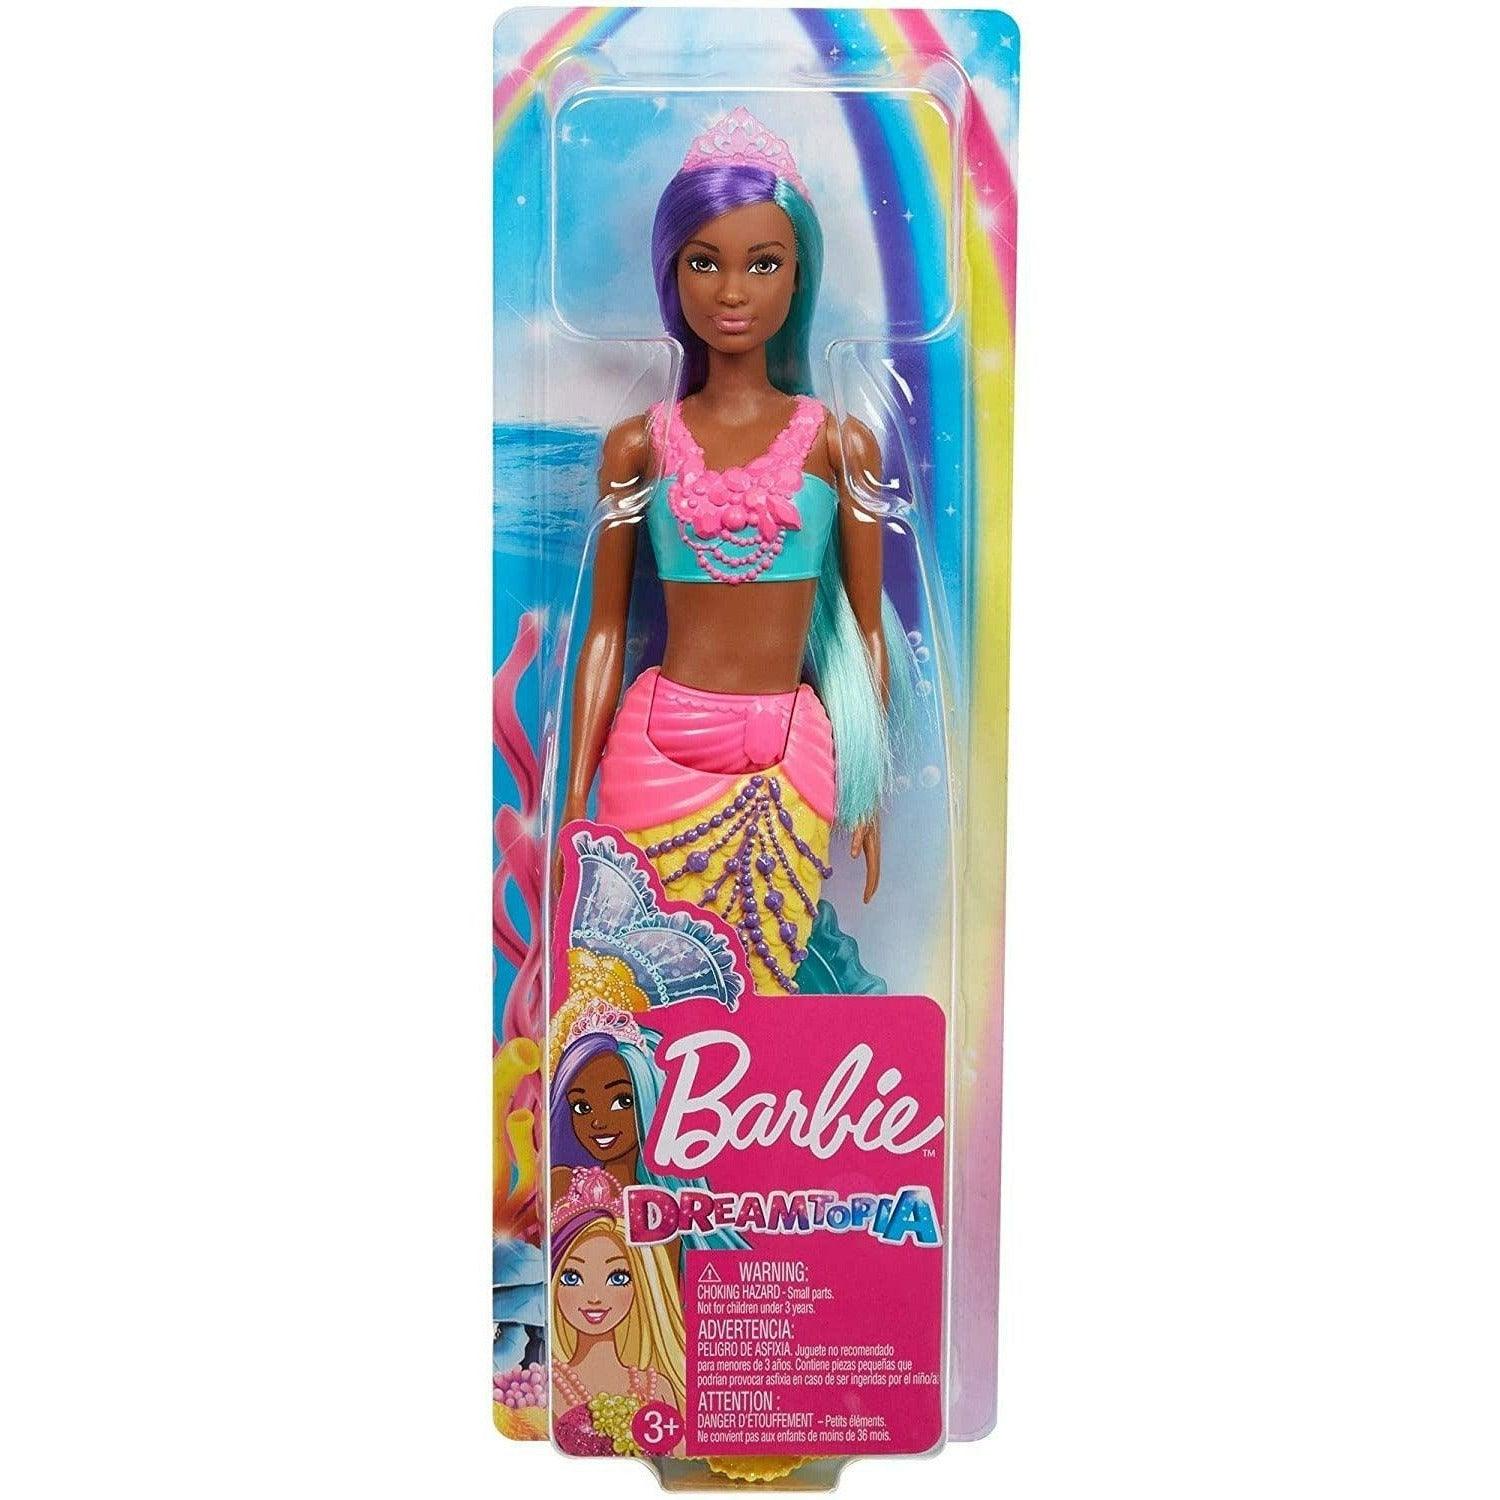 Barbie Dreamtopia Mermaid Doll, 12-inch, Teal and Purple Hair - BumbleToys - 5-7 Years, Barbie, Fashion Dolls & Accessories, Girls, Mermaid, Pre-Order